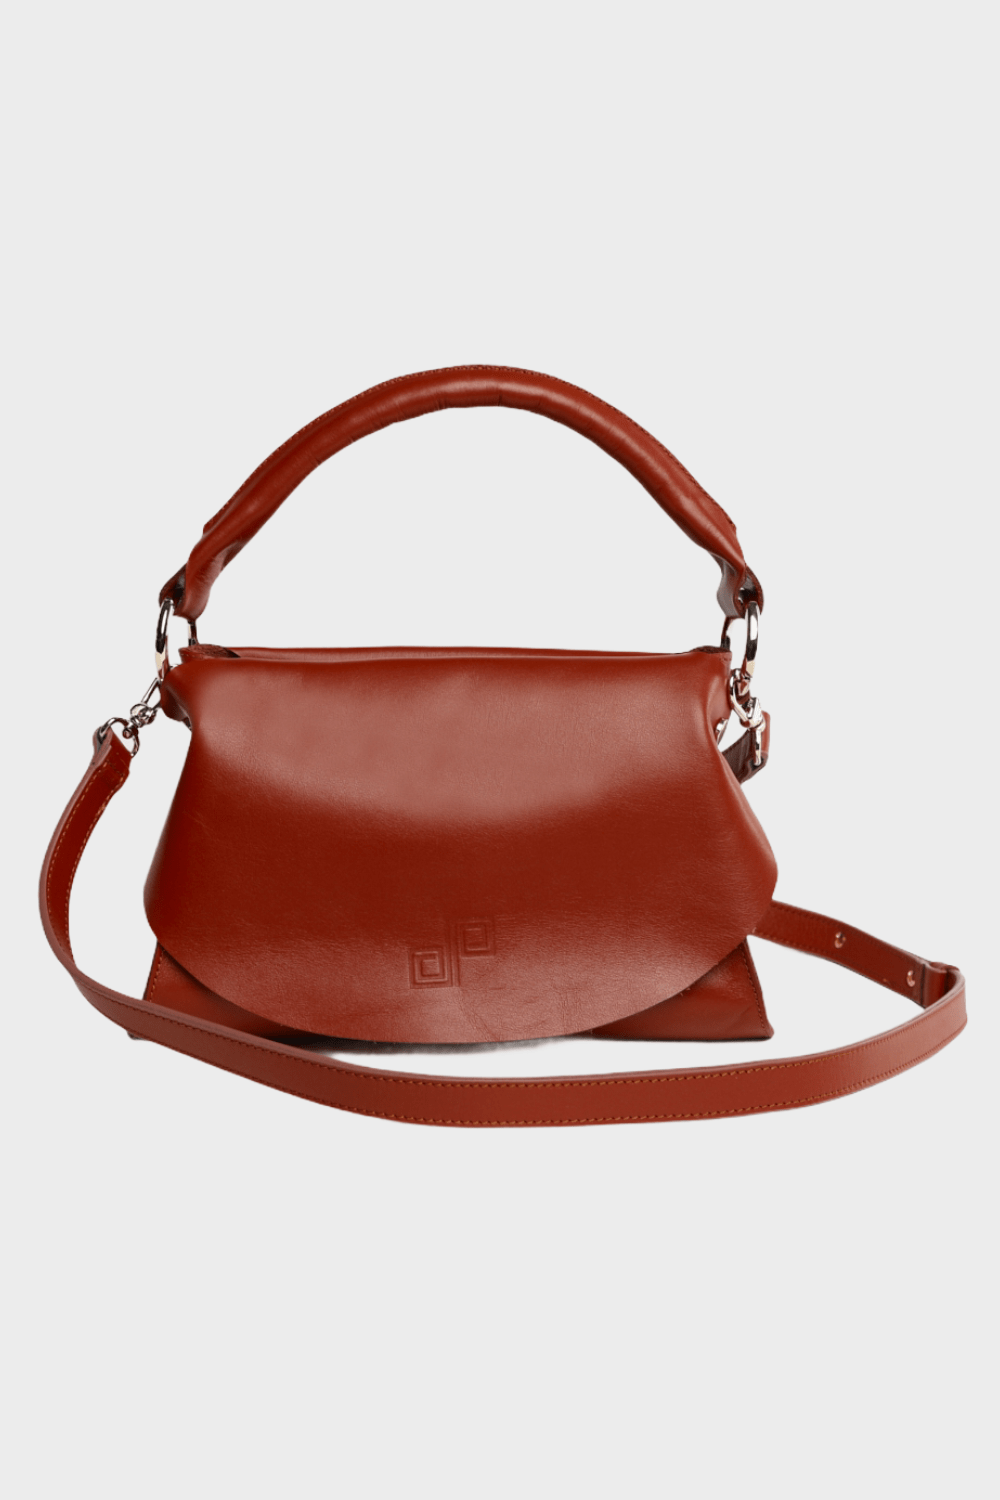 Olivia Pope Accessory BAGS Capri Brown Leather Mini Bag